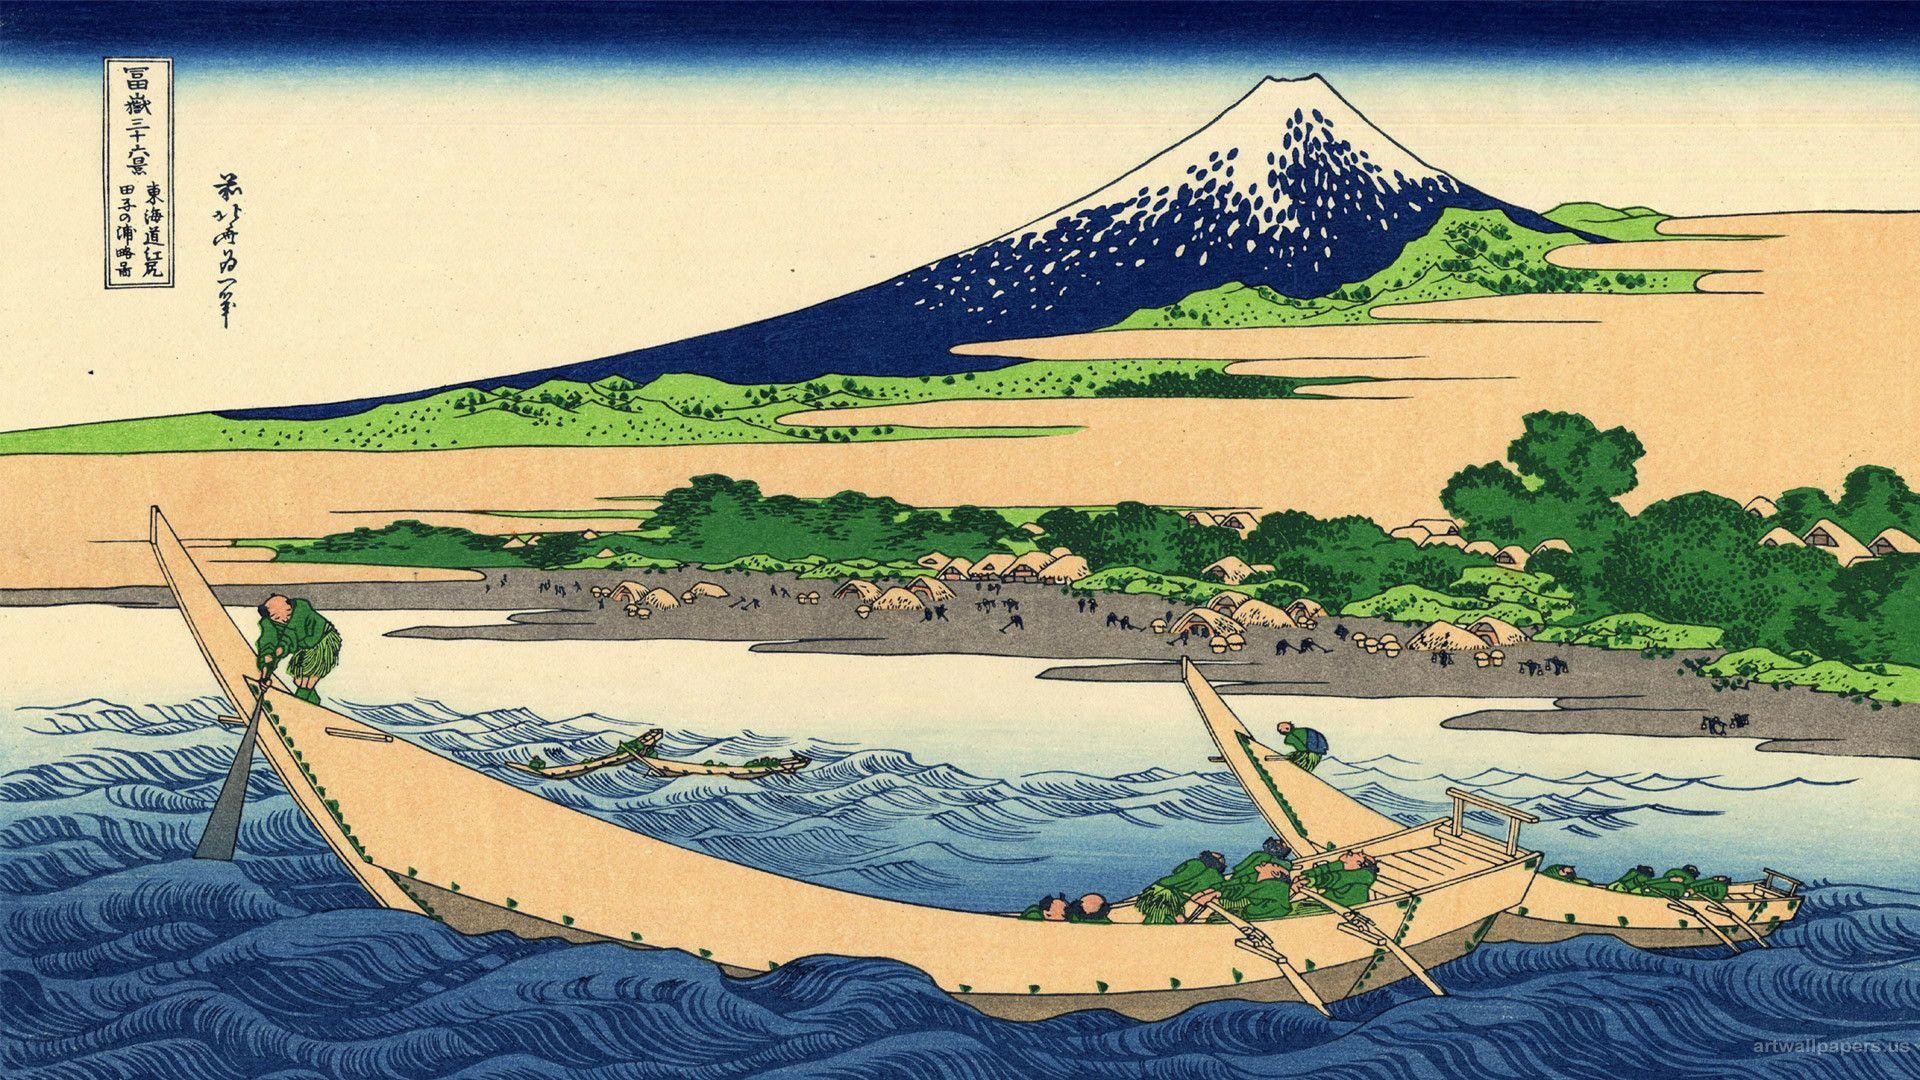 1920x1080 ... The Great Wave Off Kanagawa Wallpaper 51 Free Download